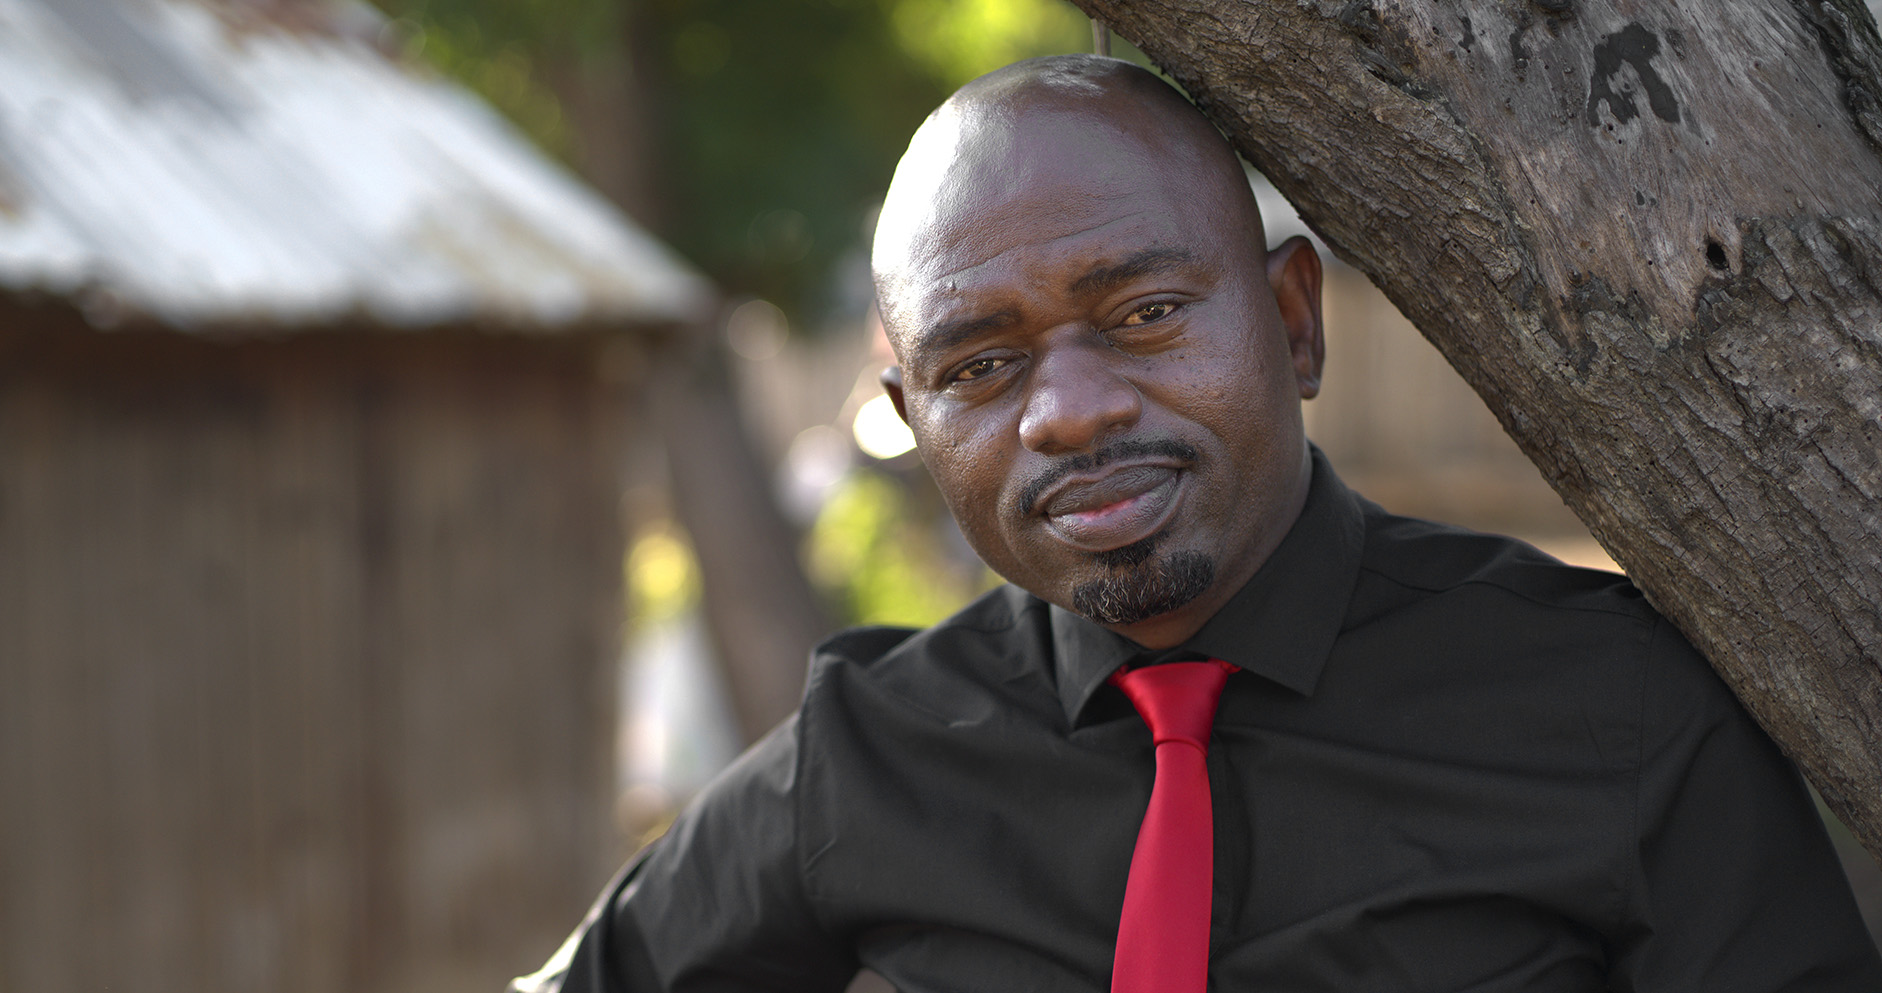 Leader of shack dwellers organisation Abahlali baseMjondolo, S'bu Zikode